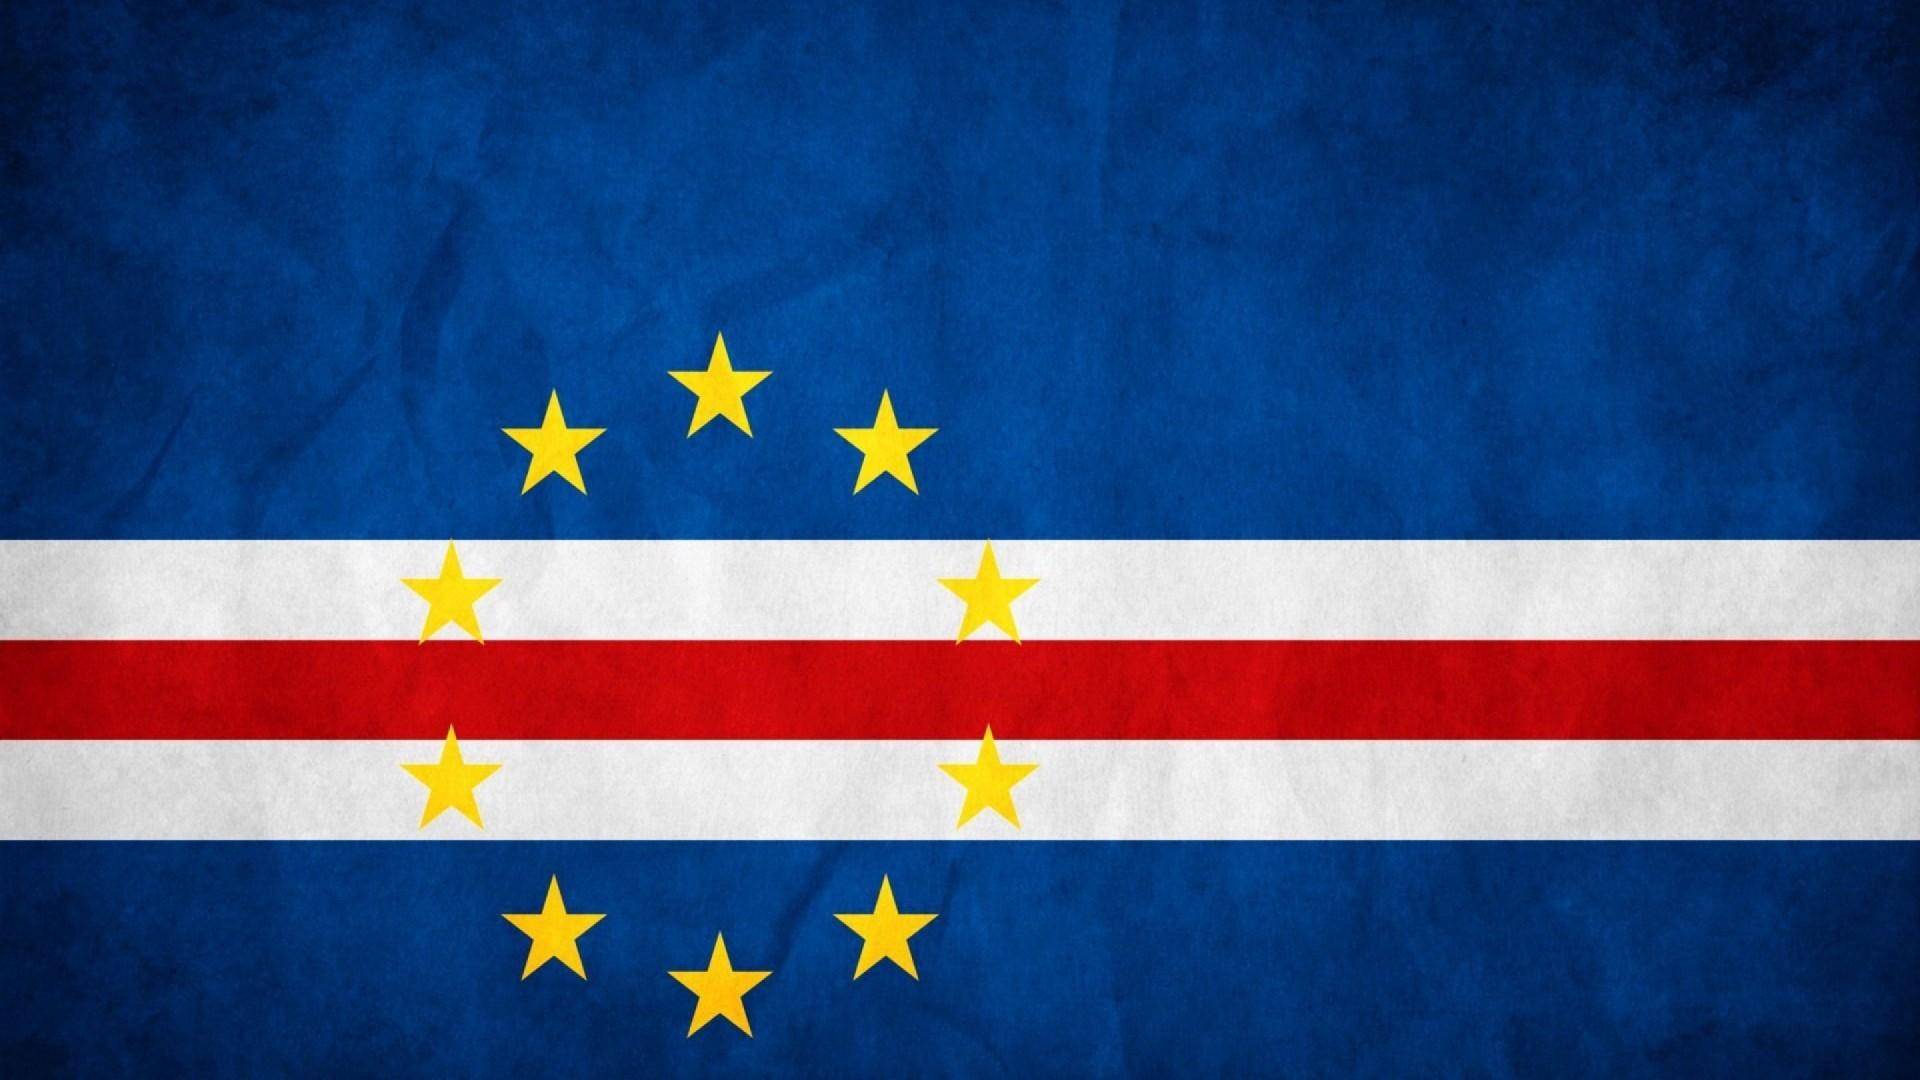 Cape Verde Flag, High Definition, High Quality, Widescreen